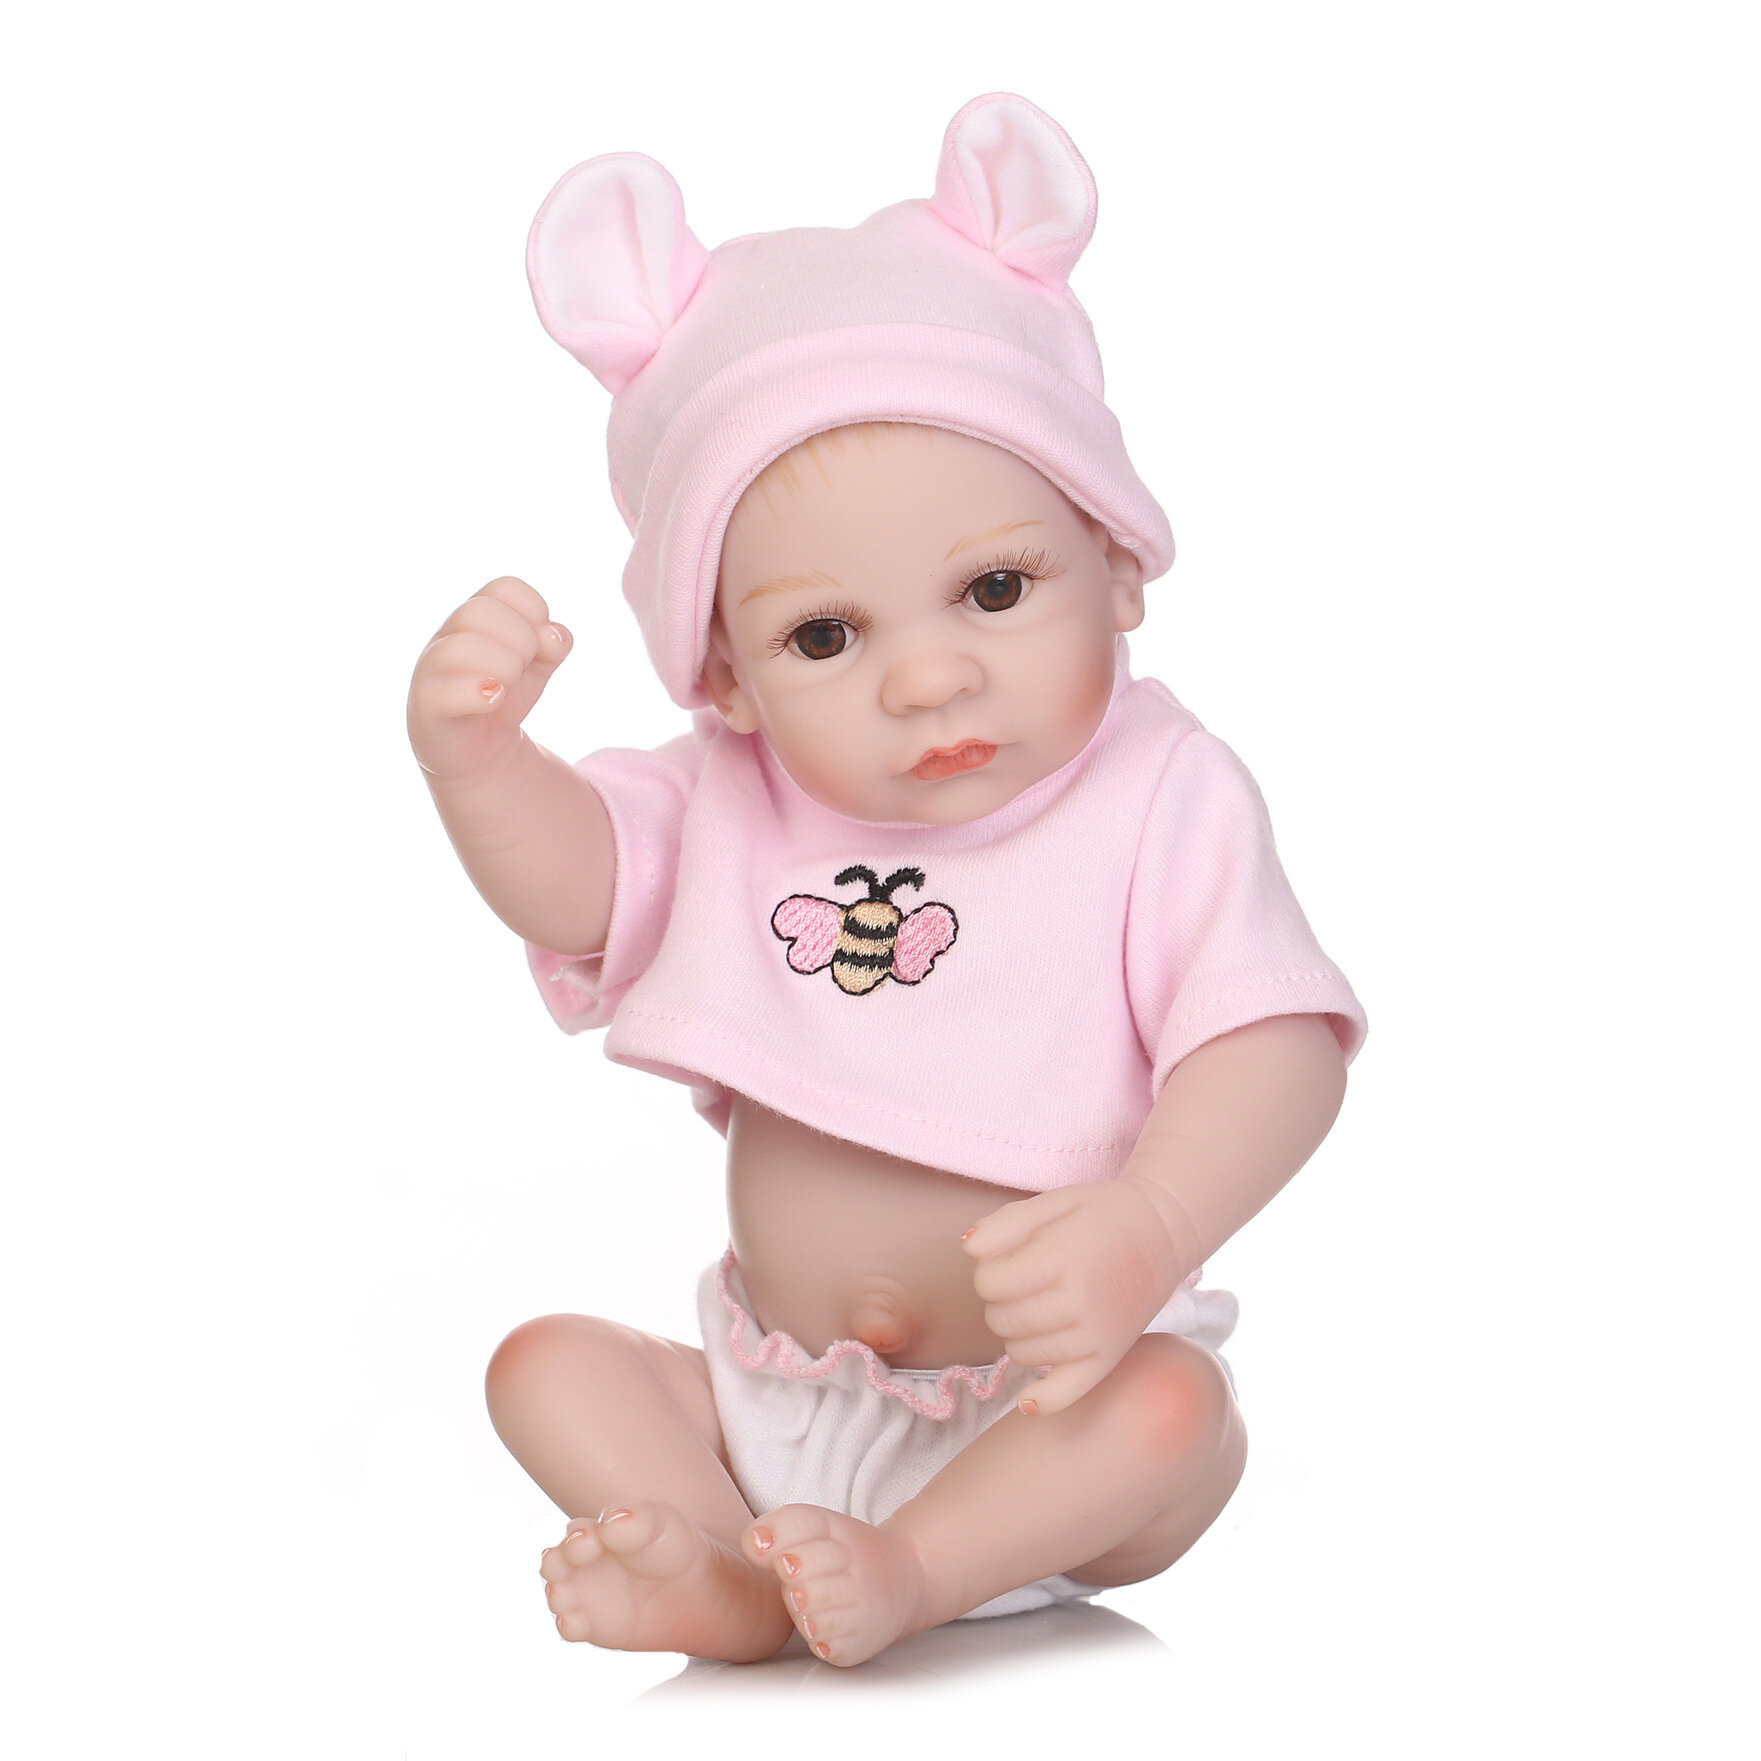 Children's Toy Gift Reborn Baby Dolls for Kids A12